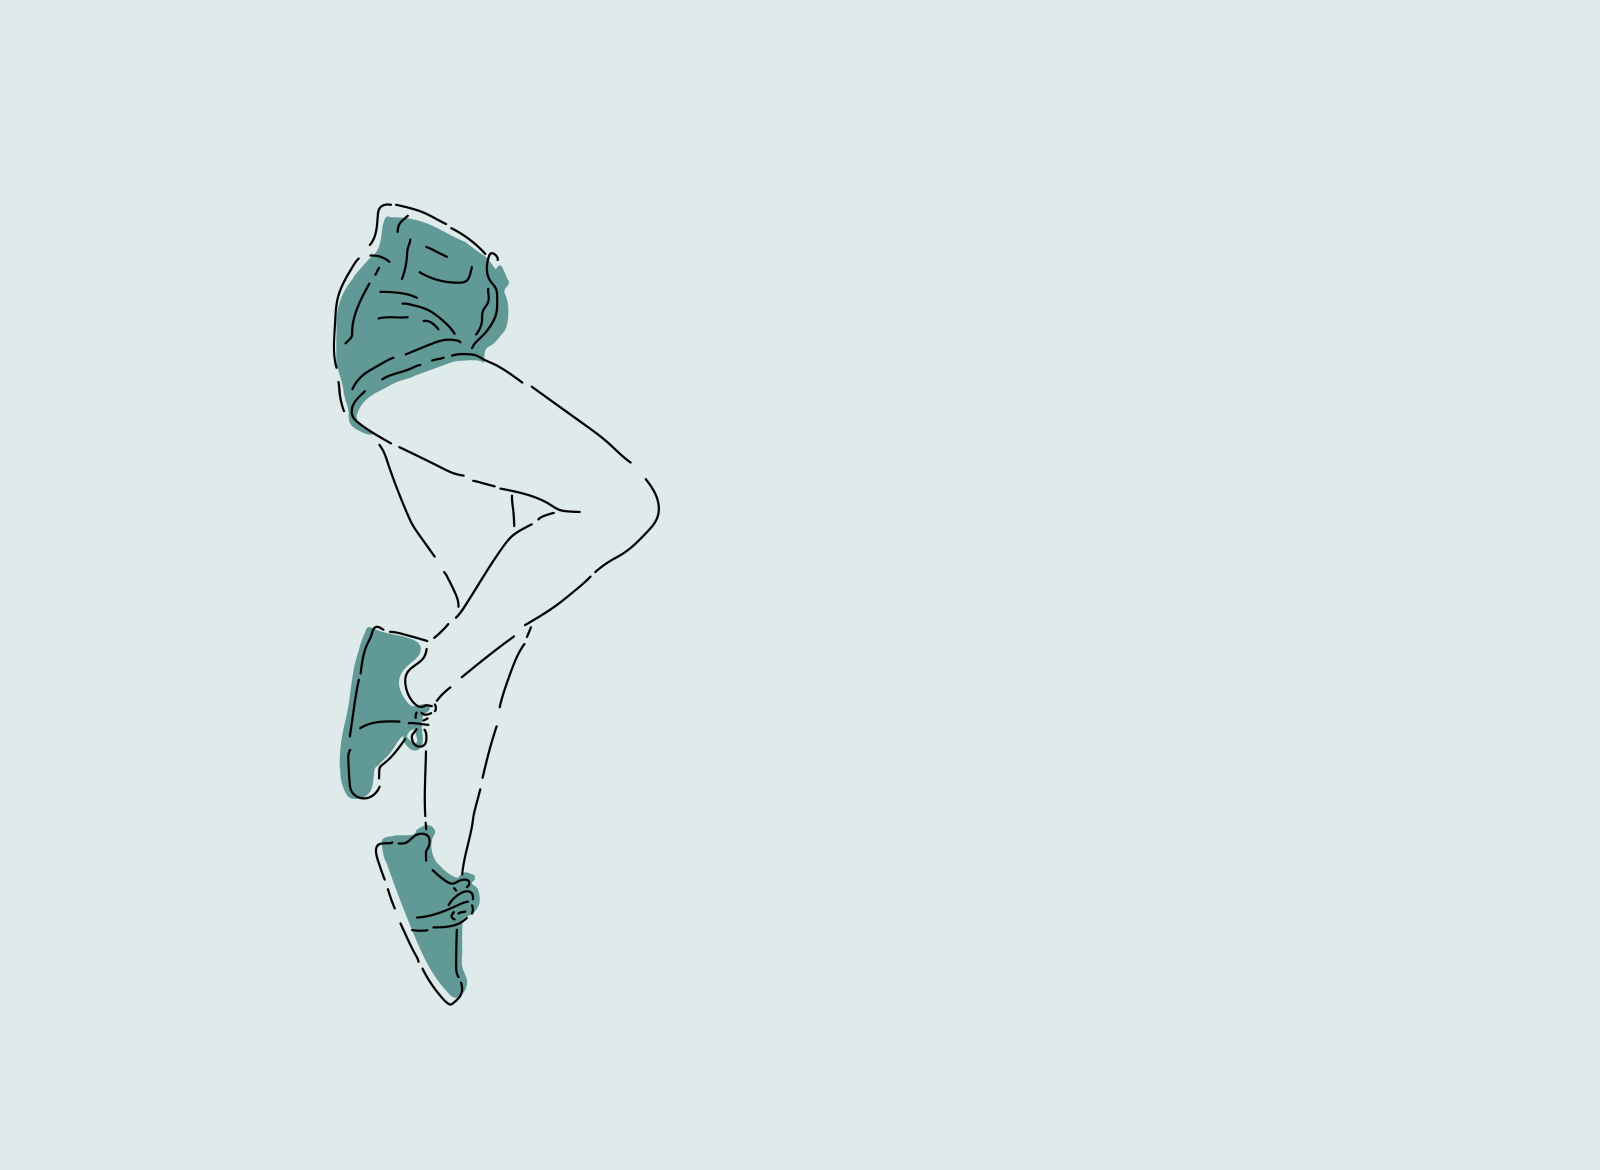 Floating legs illustration by Christiaan Kern on Dribbble